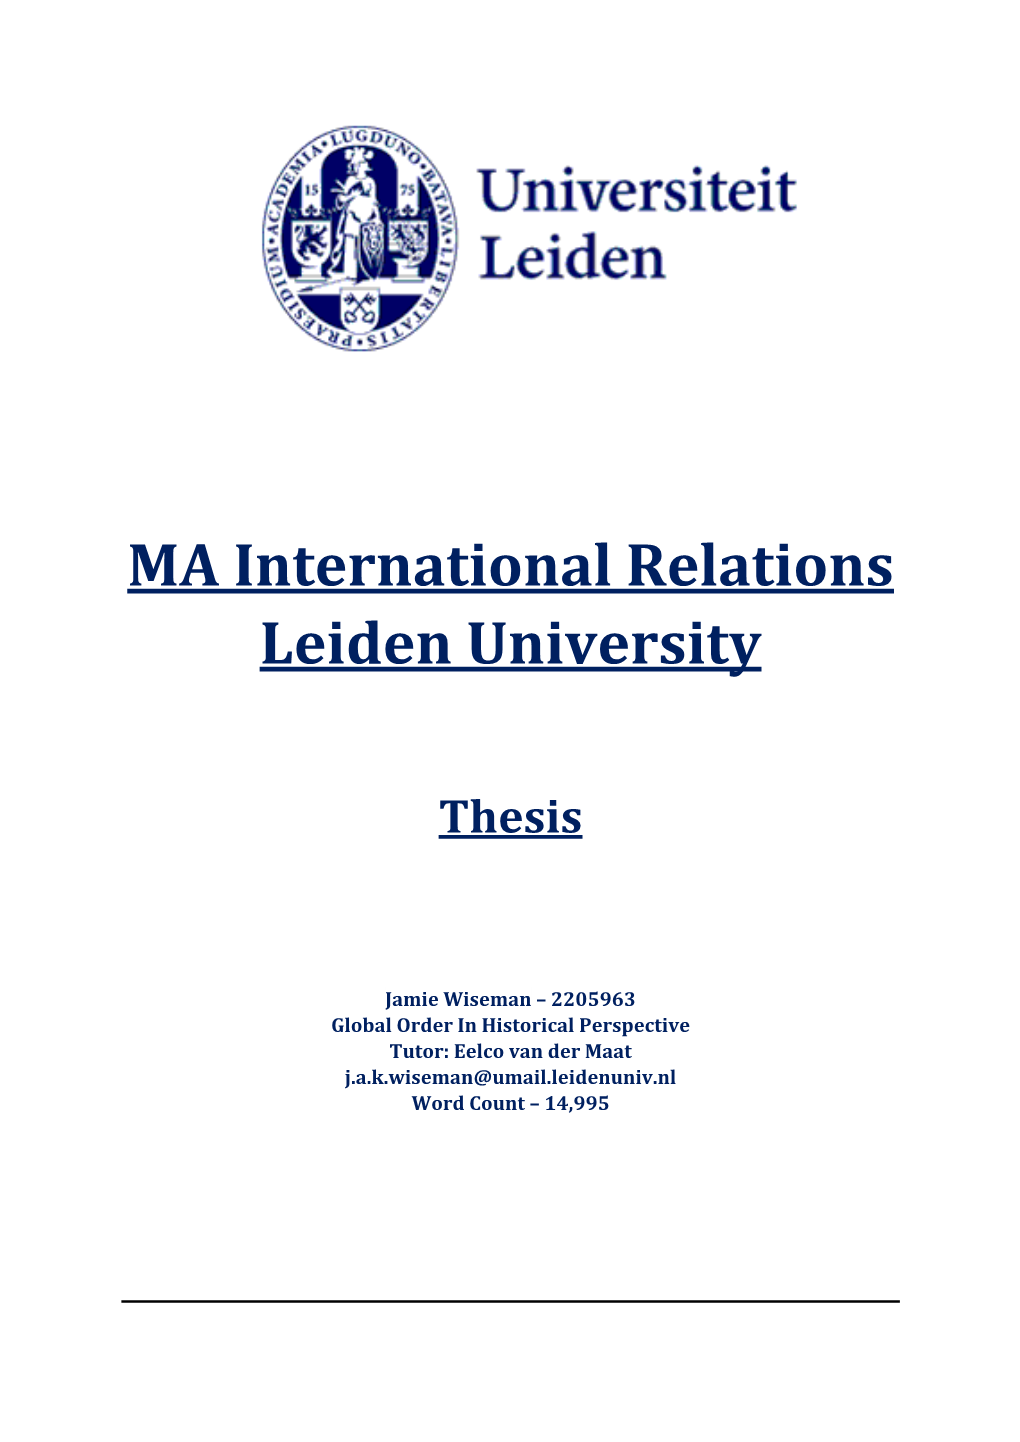 MA International Relations Leiden University